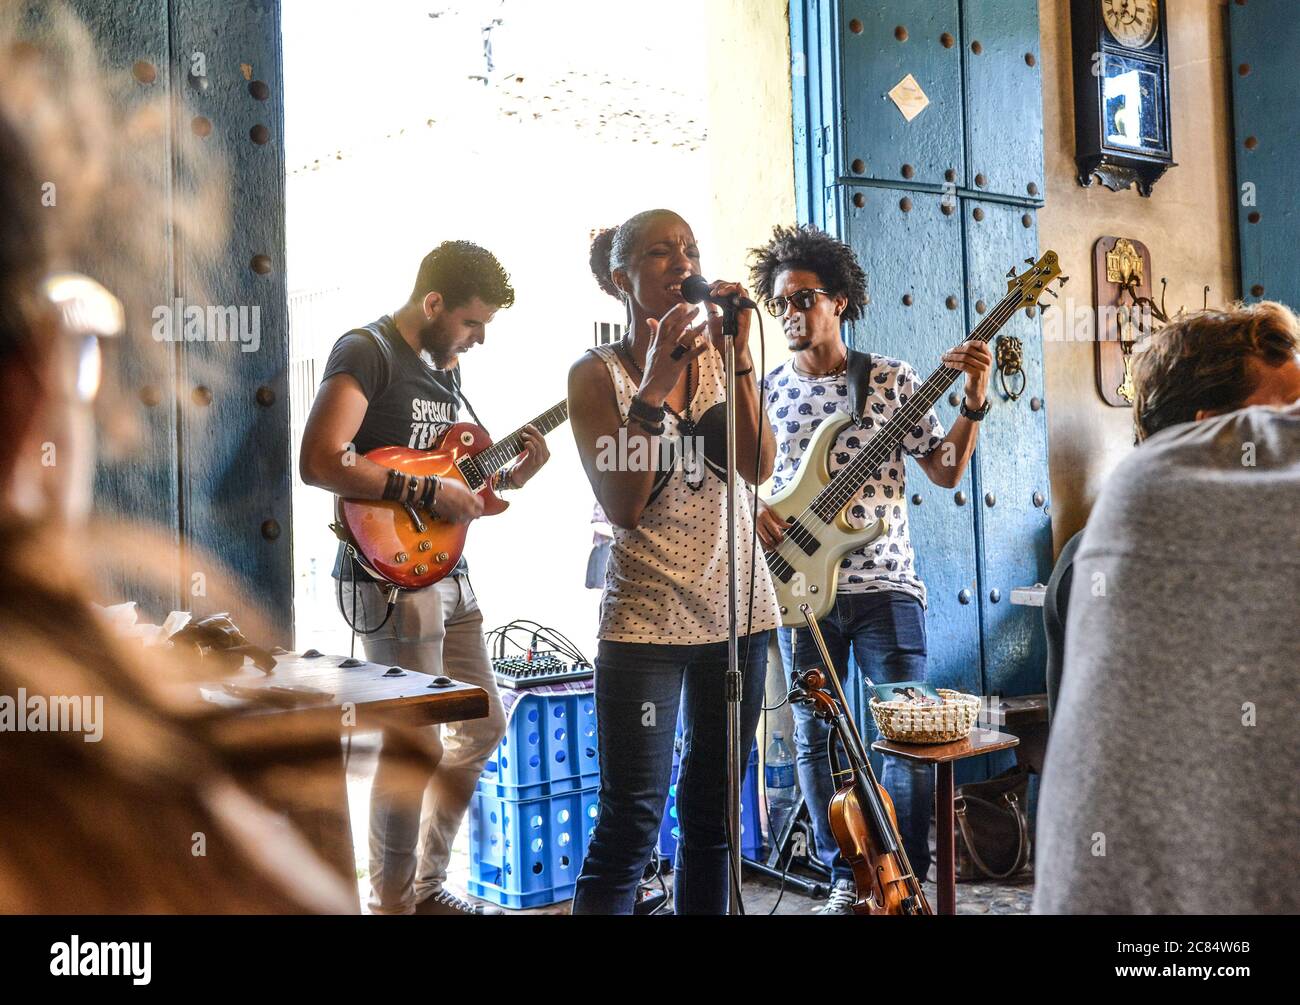 Cuba, Trinidad: Cuban band in a bar. Mixed-race singer, guitarist and bassist. Young musicians Stock Photo